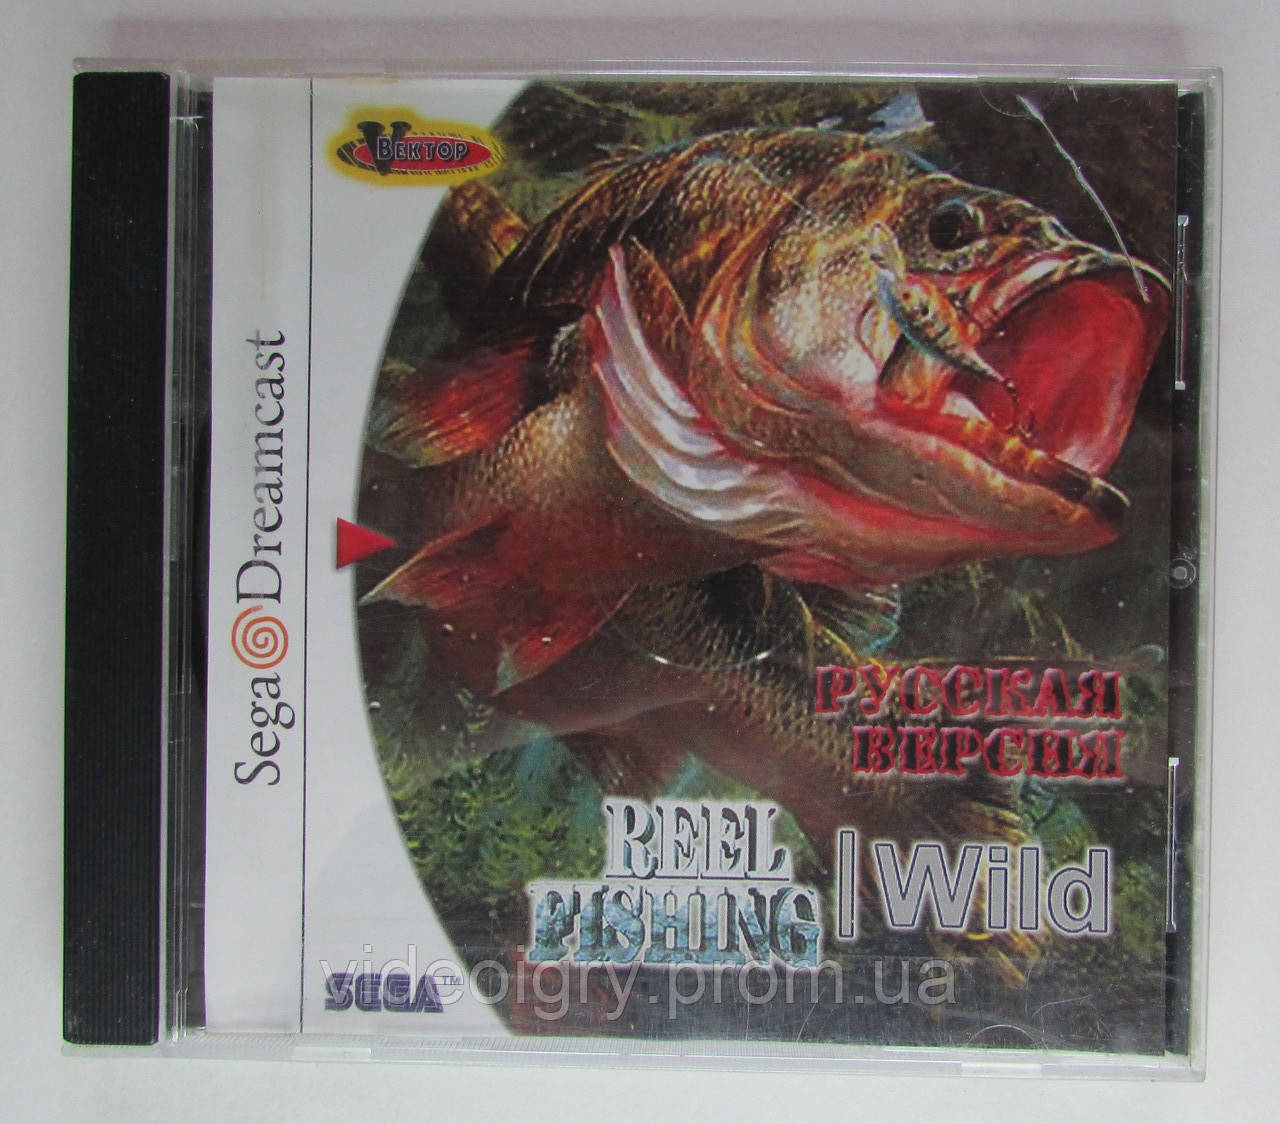 Reel Fishing: Wild Sega Dreamcast (ID#1397184437), цена: 100 ₴, купить на